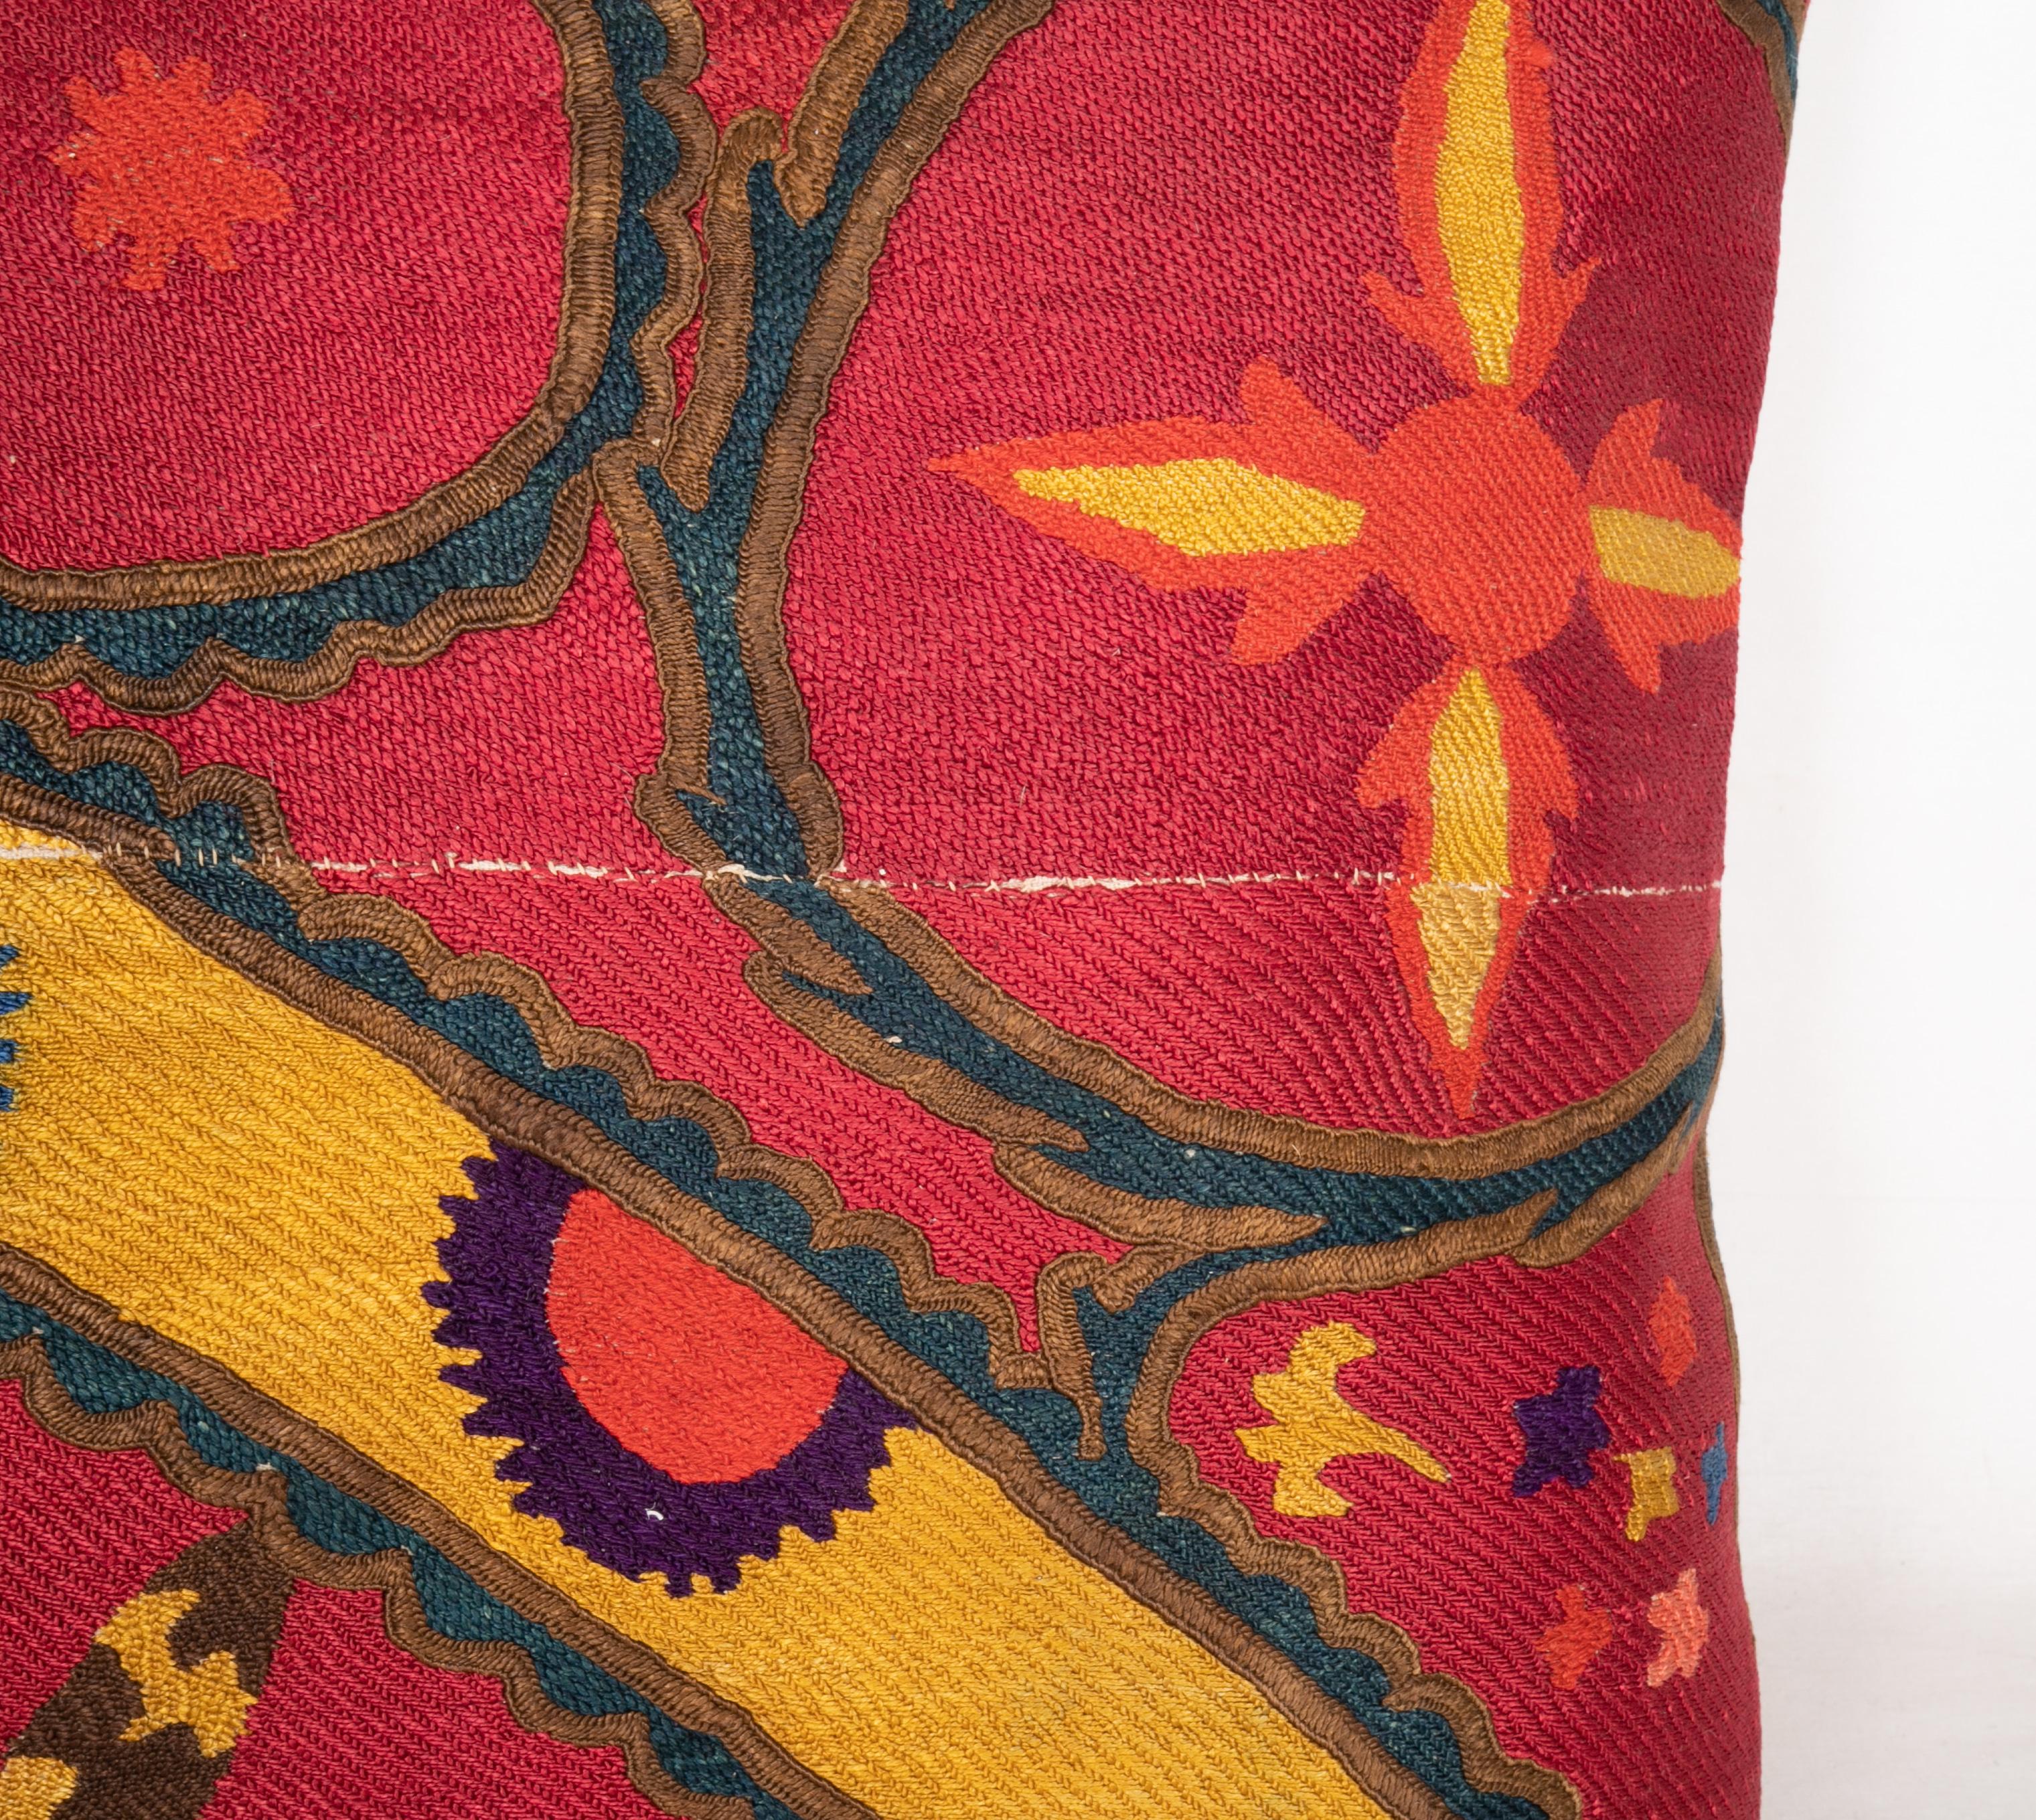 Uzbek Antique Suzani Pillow Case Fashioned from a Late 19th Century Pishkent Suzani For Sale